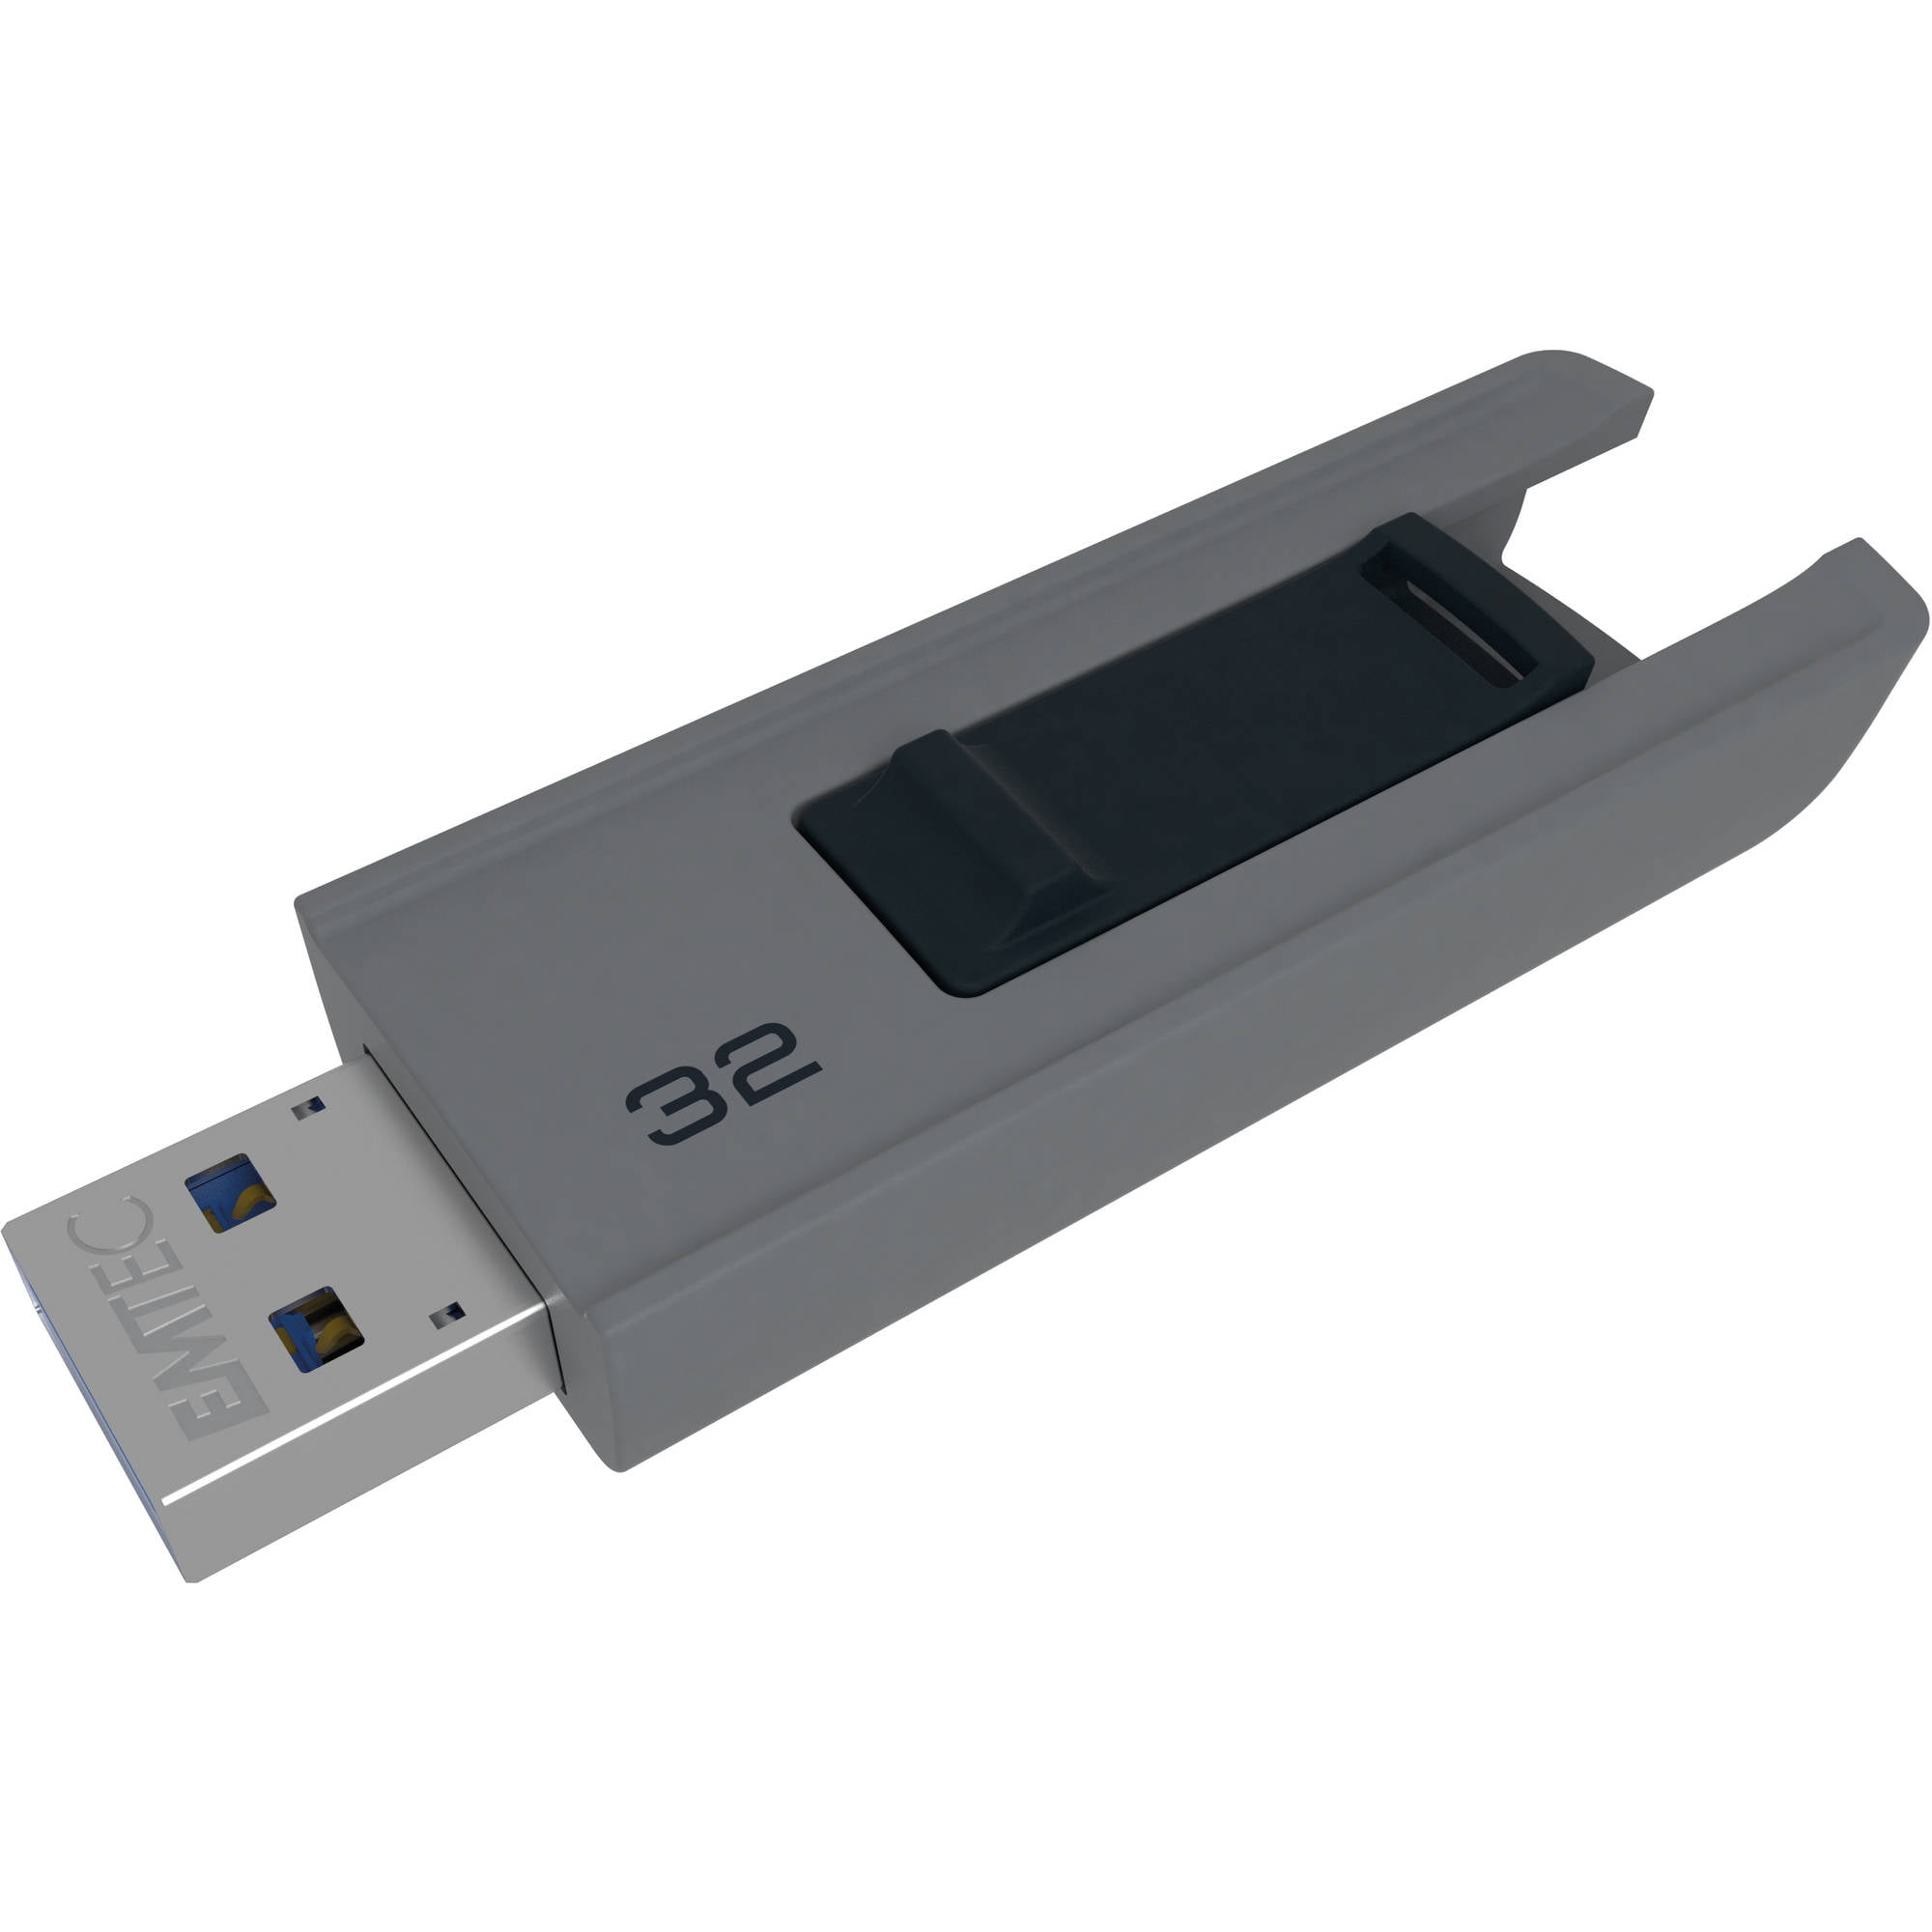 EMTEC Slide 32GB USB 3.0 Flash Drive 